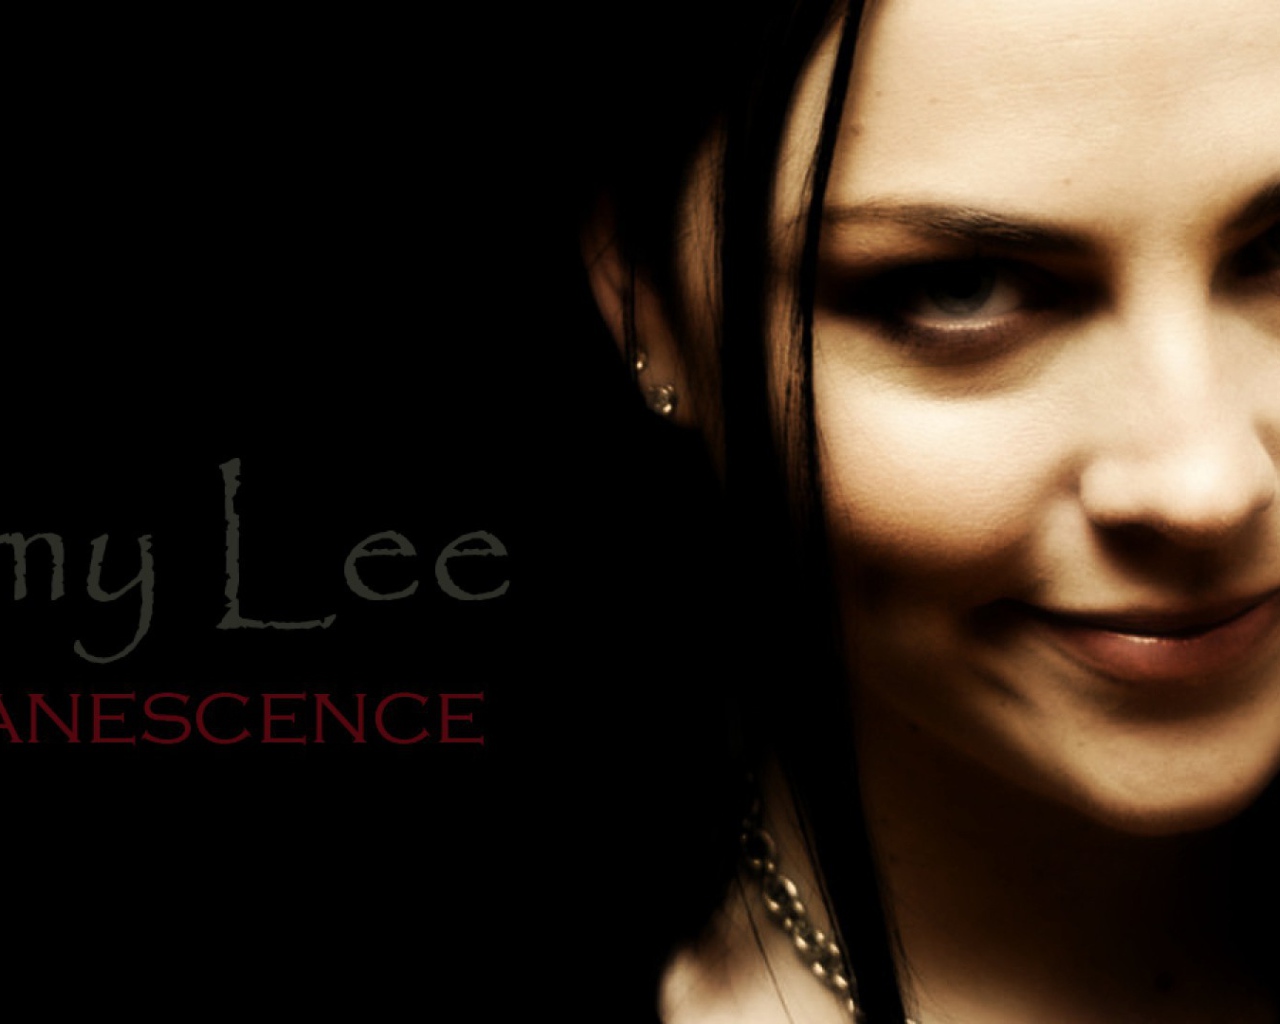 Эми Ли из Evanescence